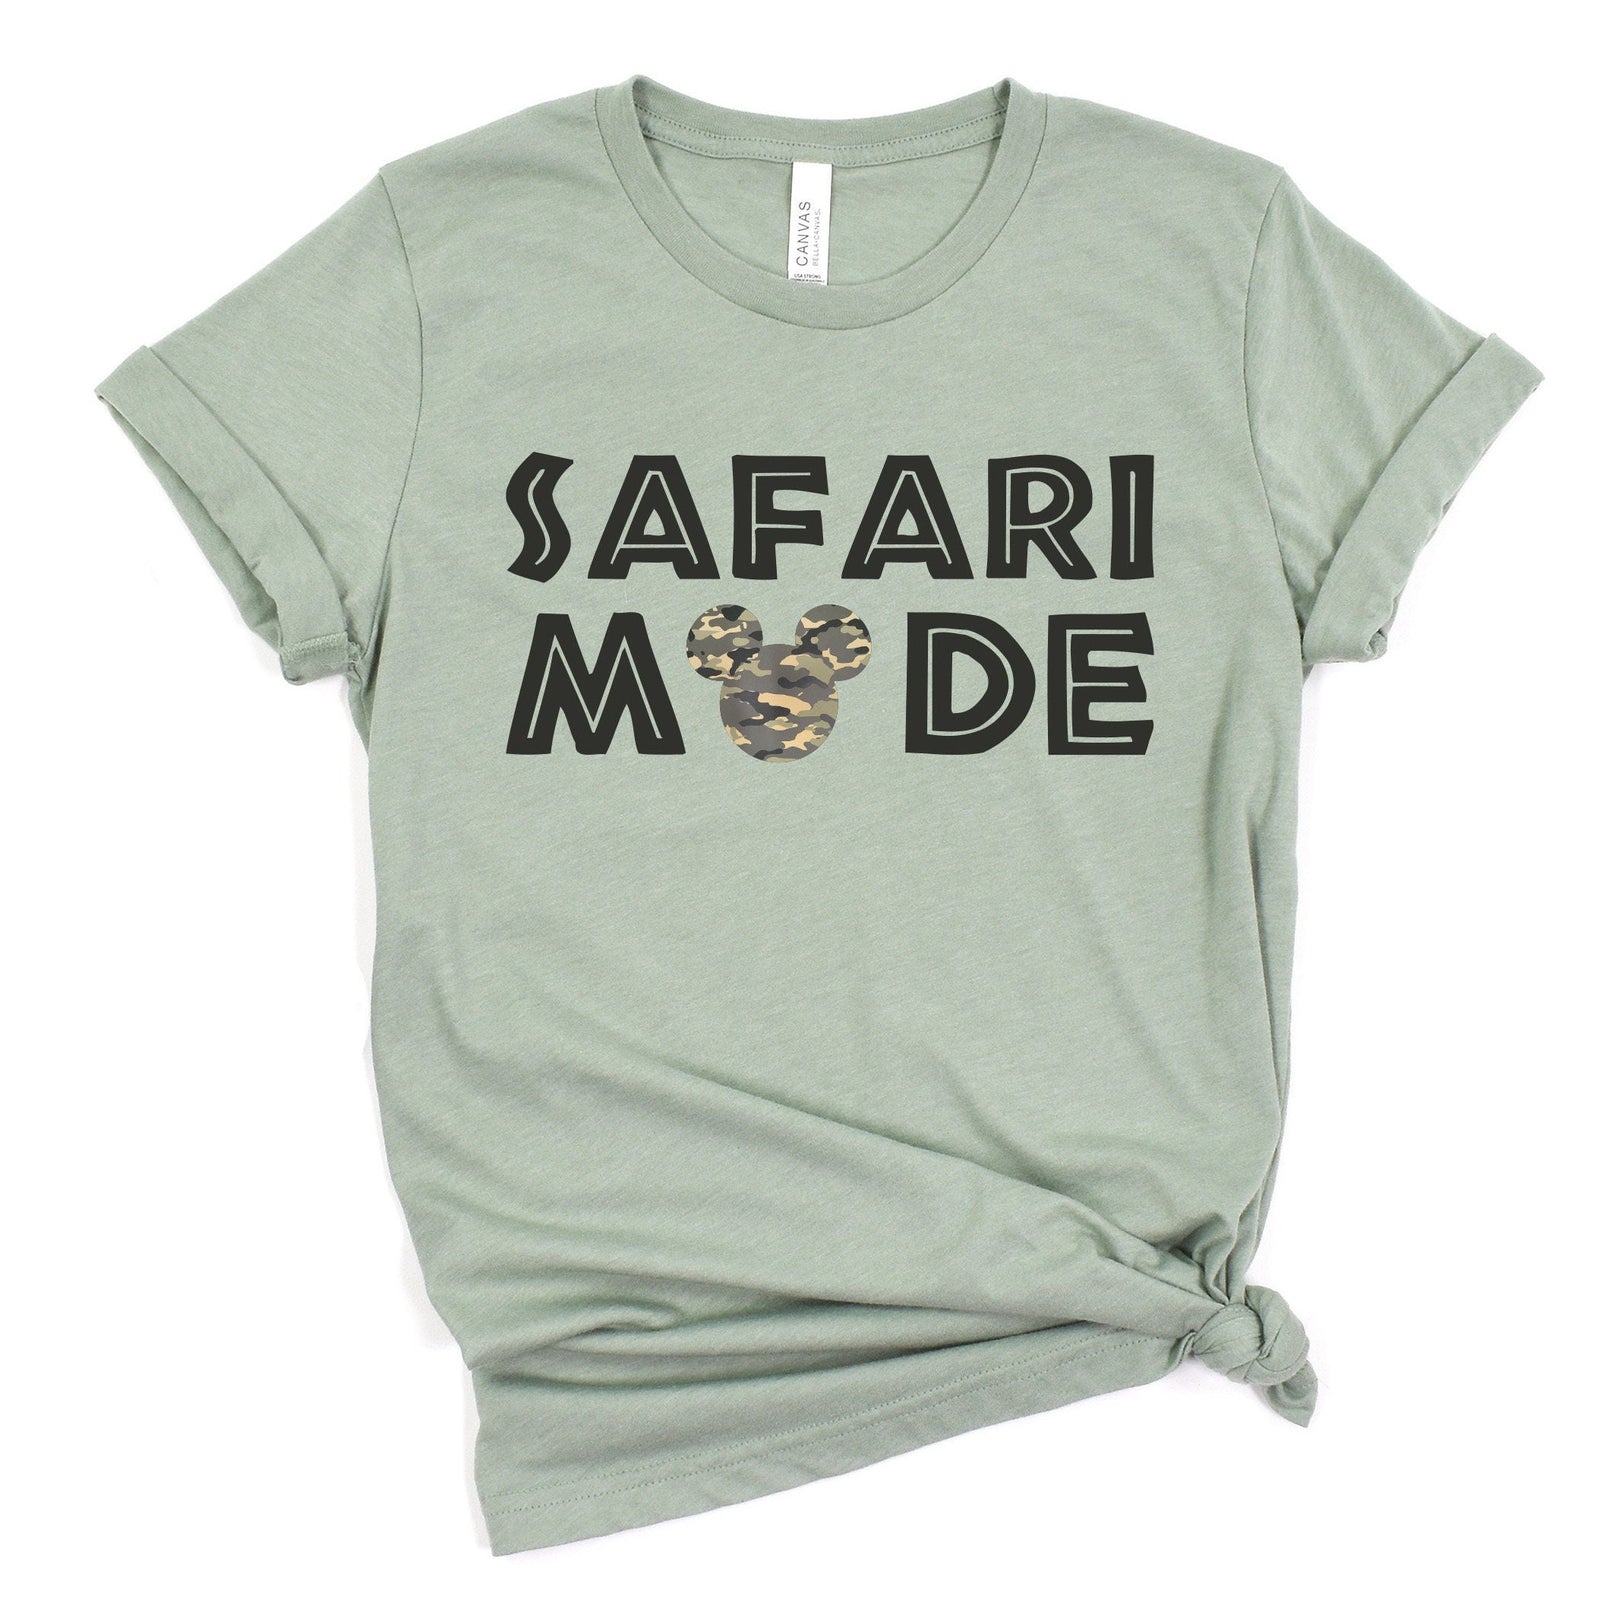 Safari Mode Animal Kingdom Mickey t shirt - Disney Trip Matching Shirts - Mickey Mouse T Shirt